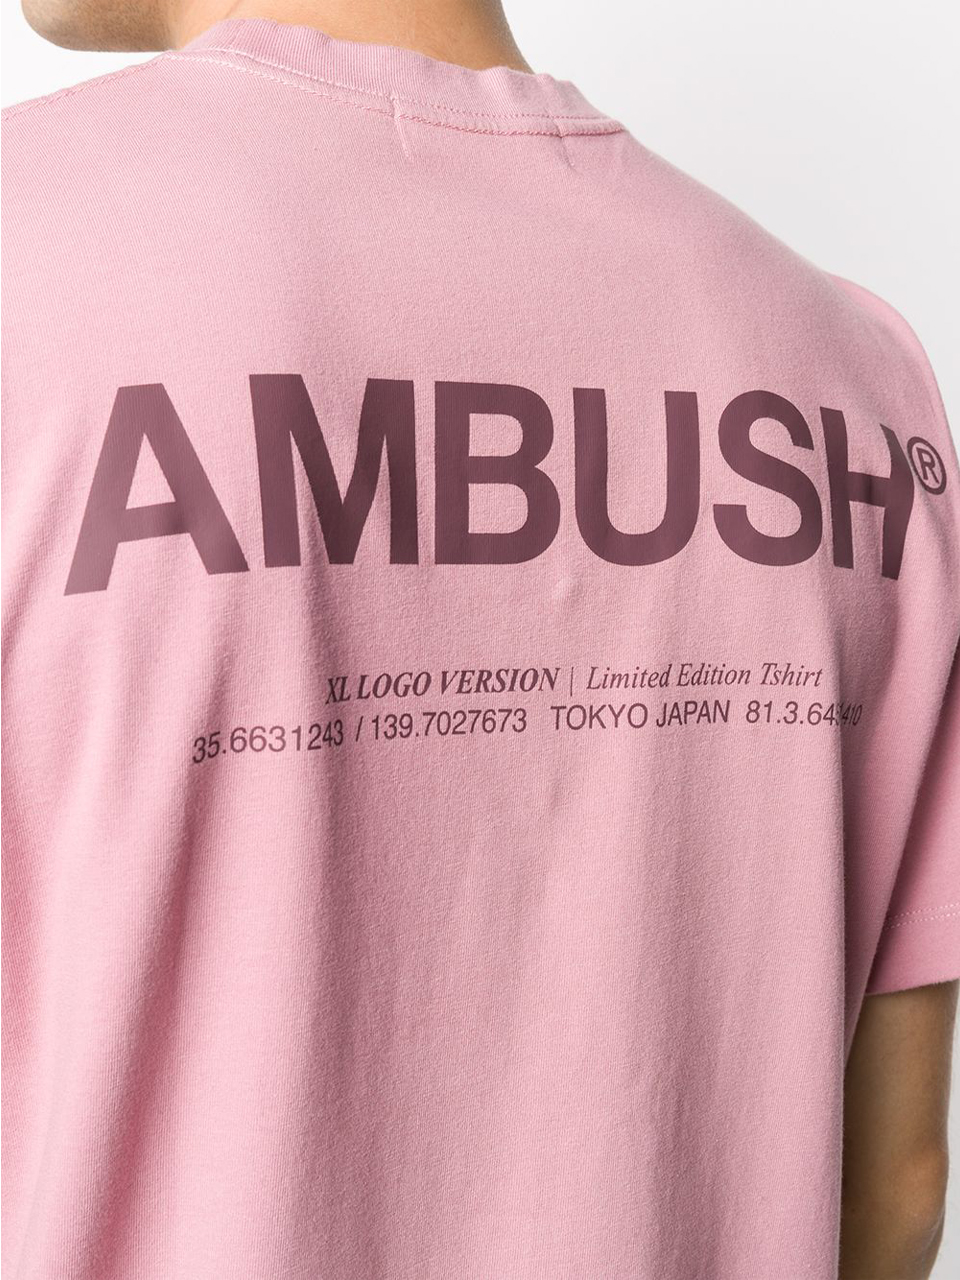 Imagem de: Camiseta AMBUSH Rosa com Estampa Posterior